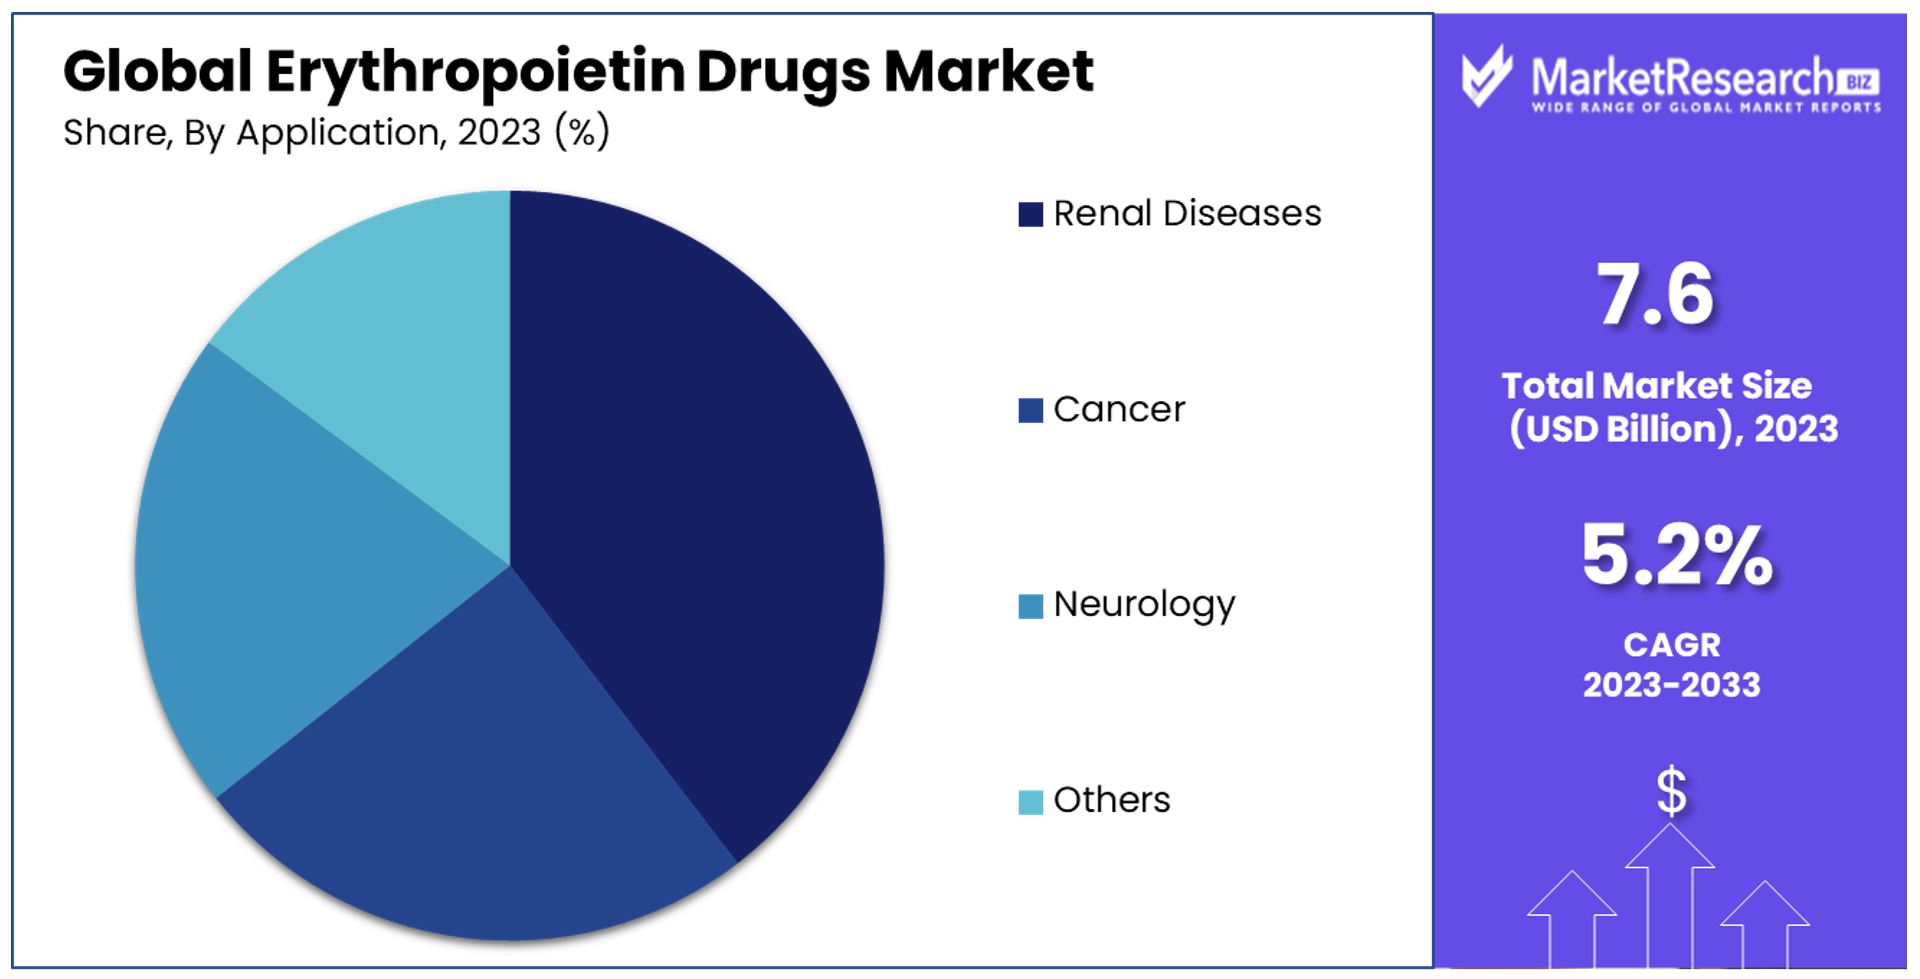 Erythropoietin Drugs Market By Share